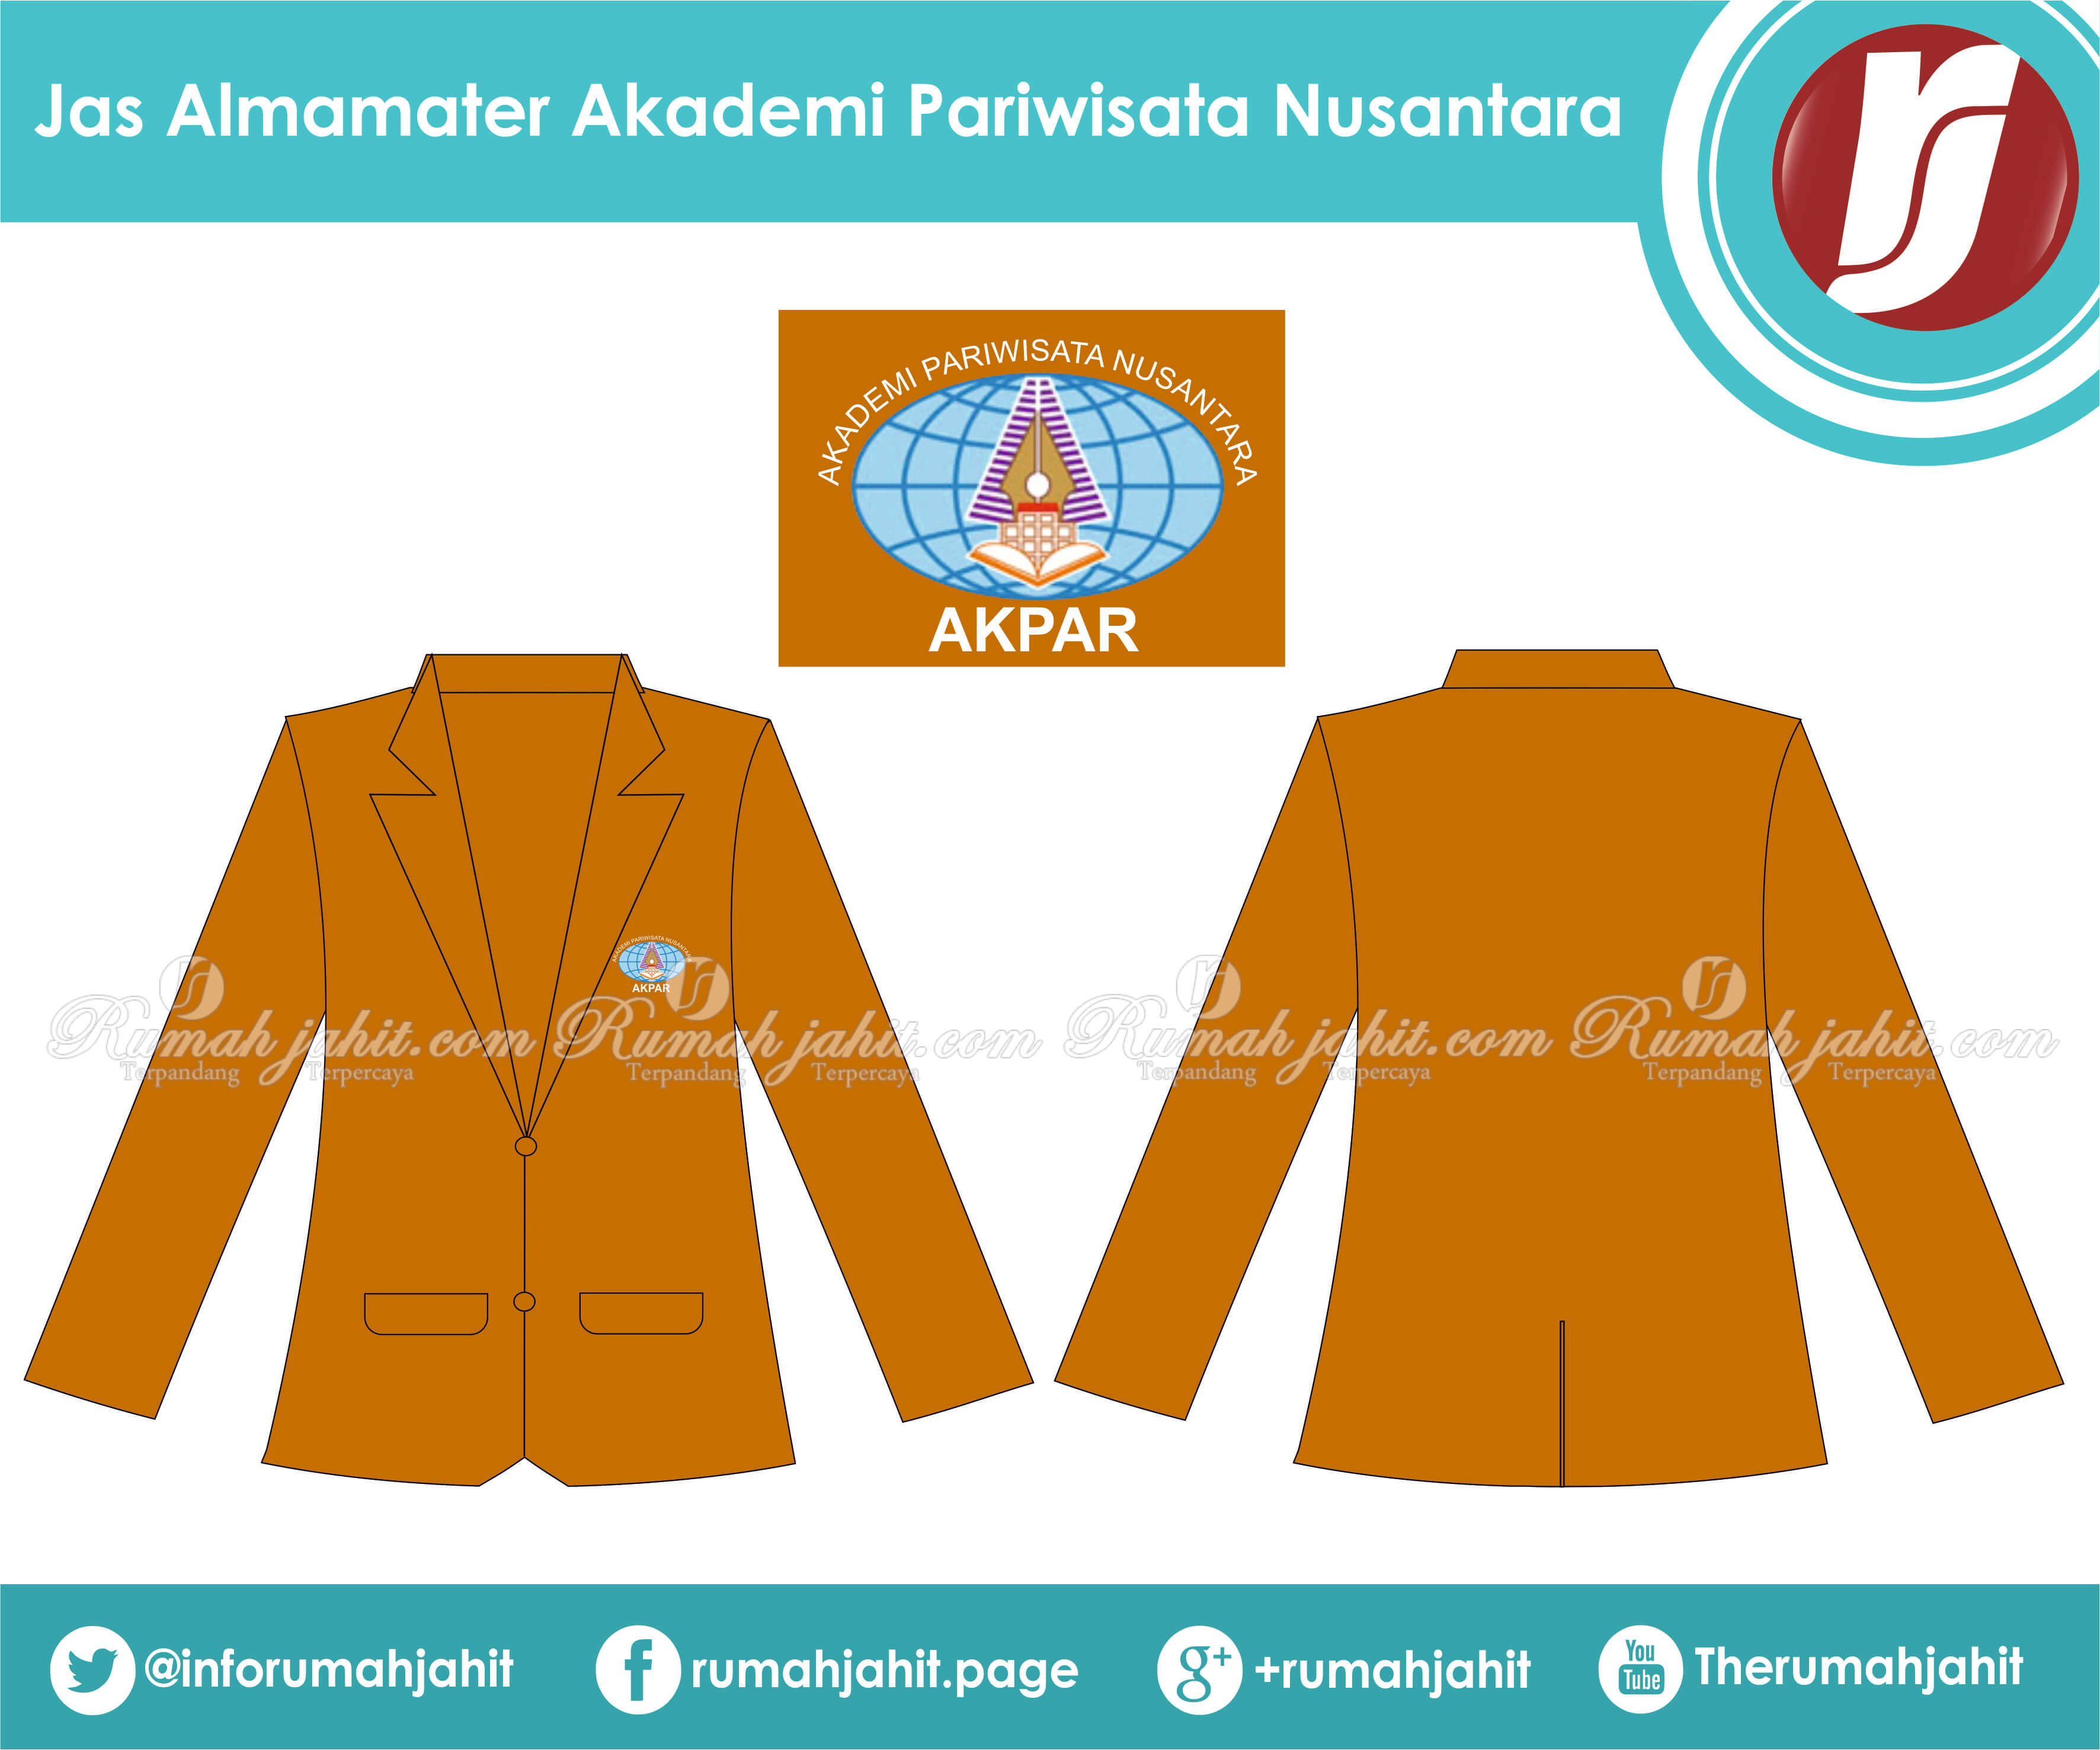 Akademi pariwisata indonesia